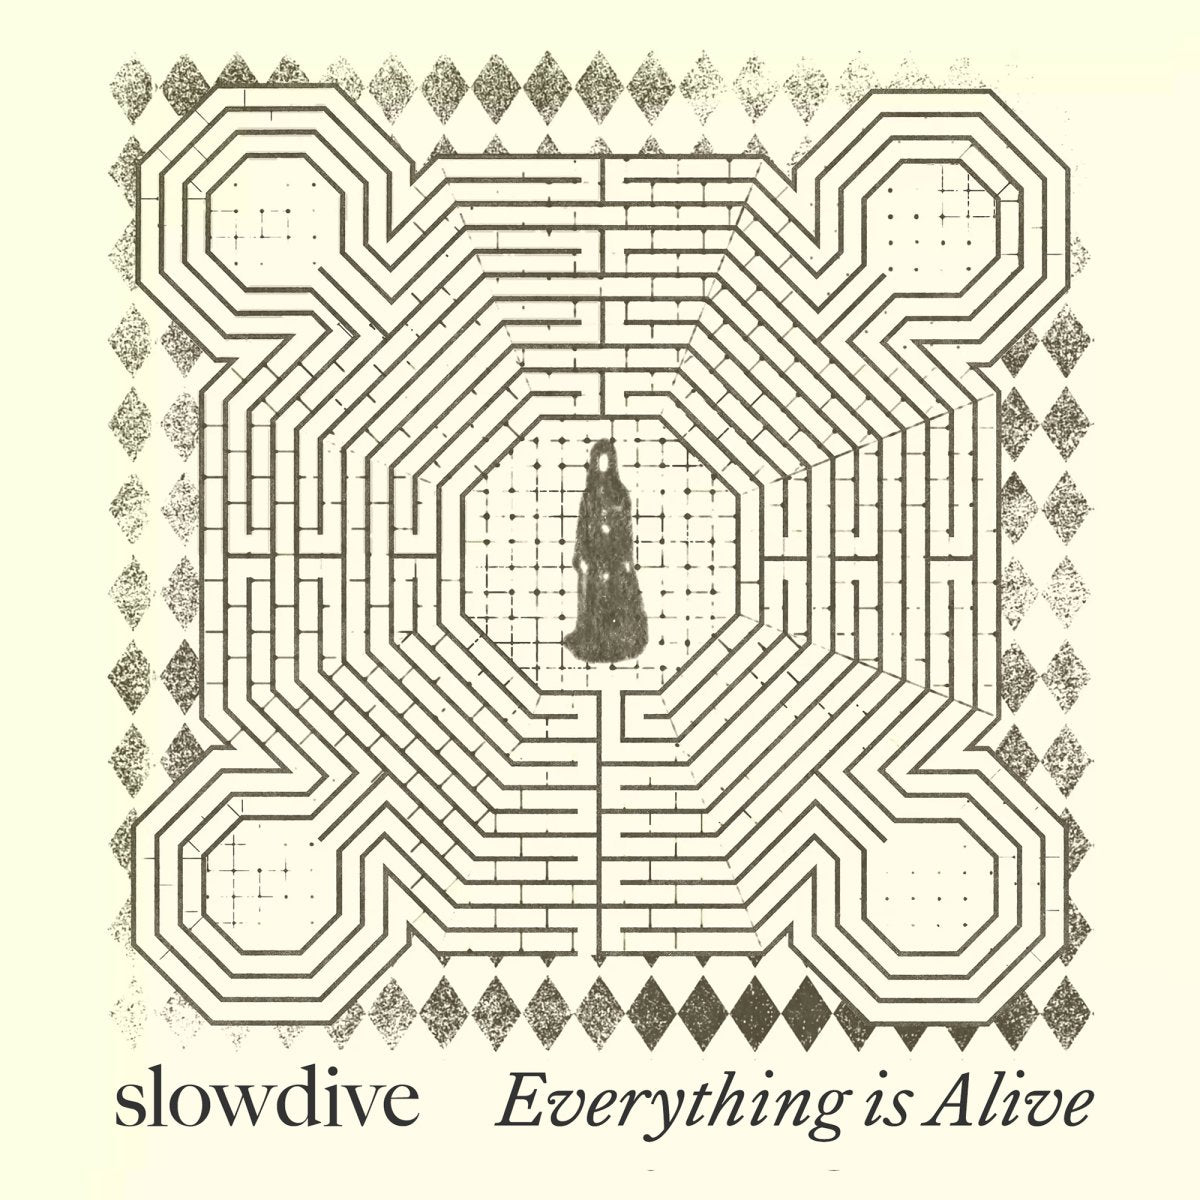 Slowdive Everything is Alive Enamel Pin - Indie Vinyl Den